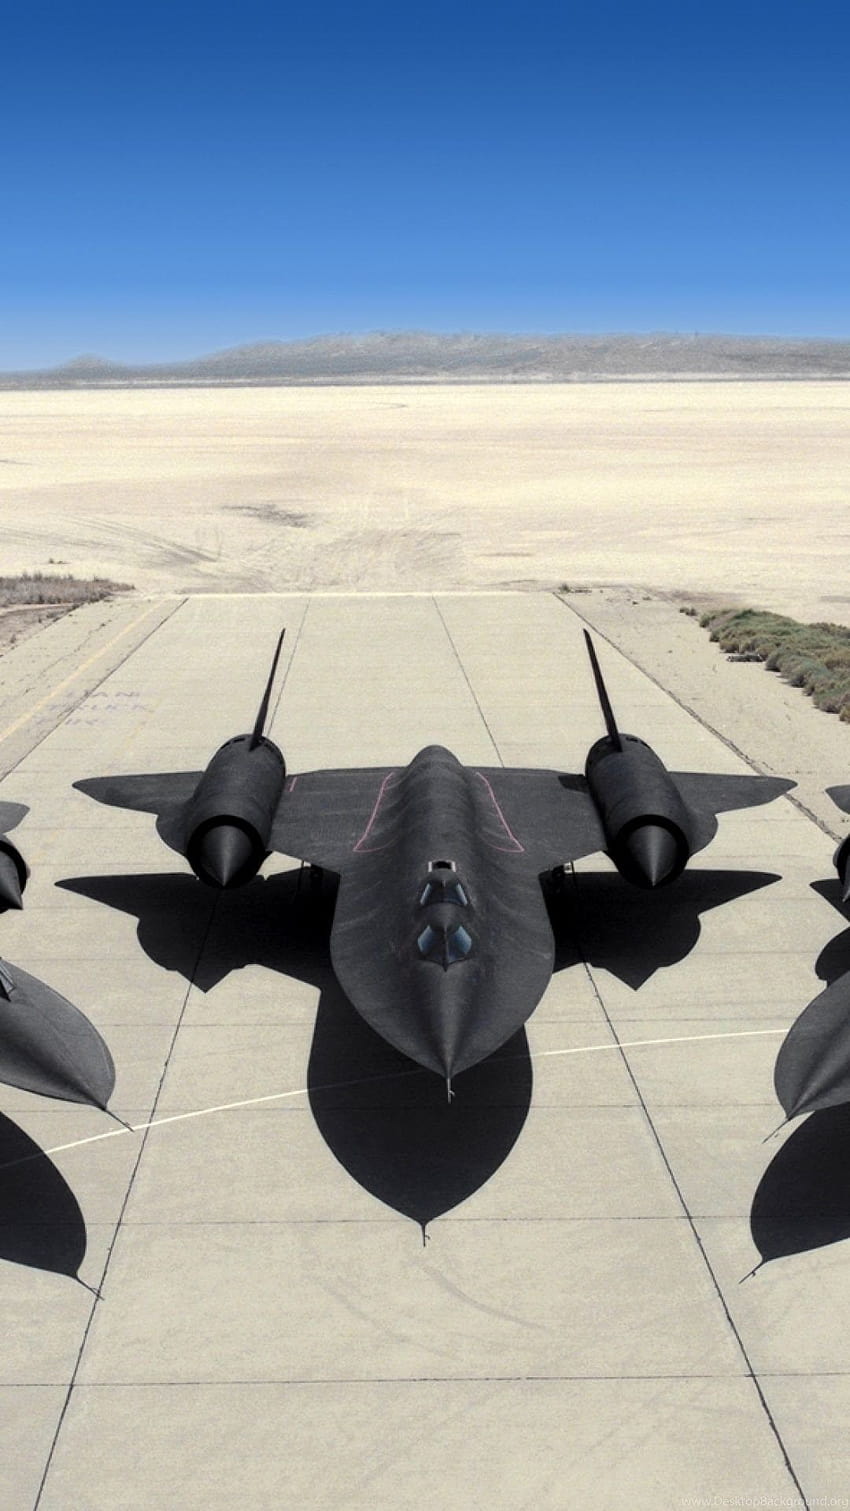 How Russia Helped 'Build' the SR-71 Blackbird Spy Plane - 19FortyFive